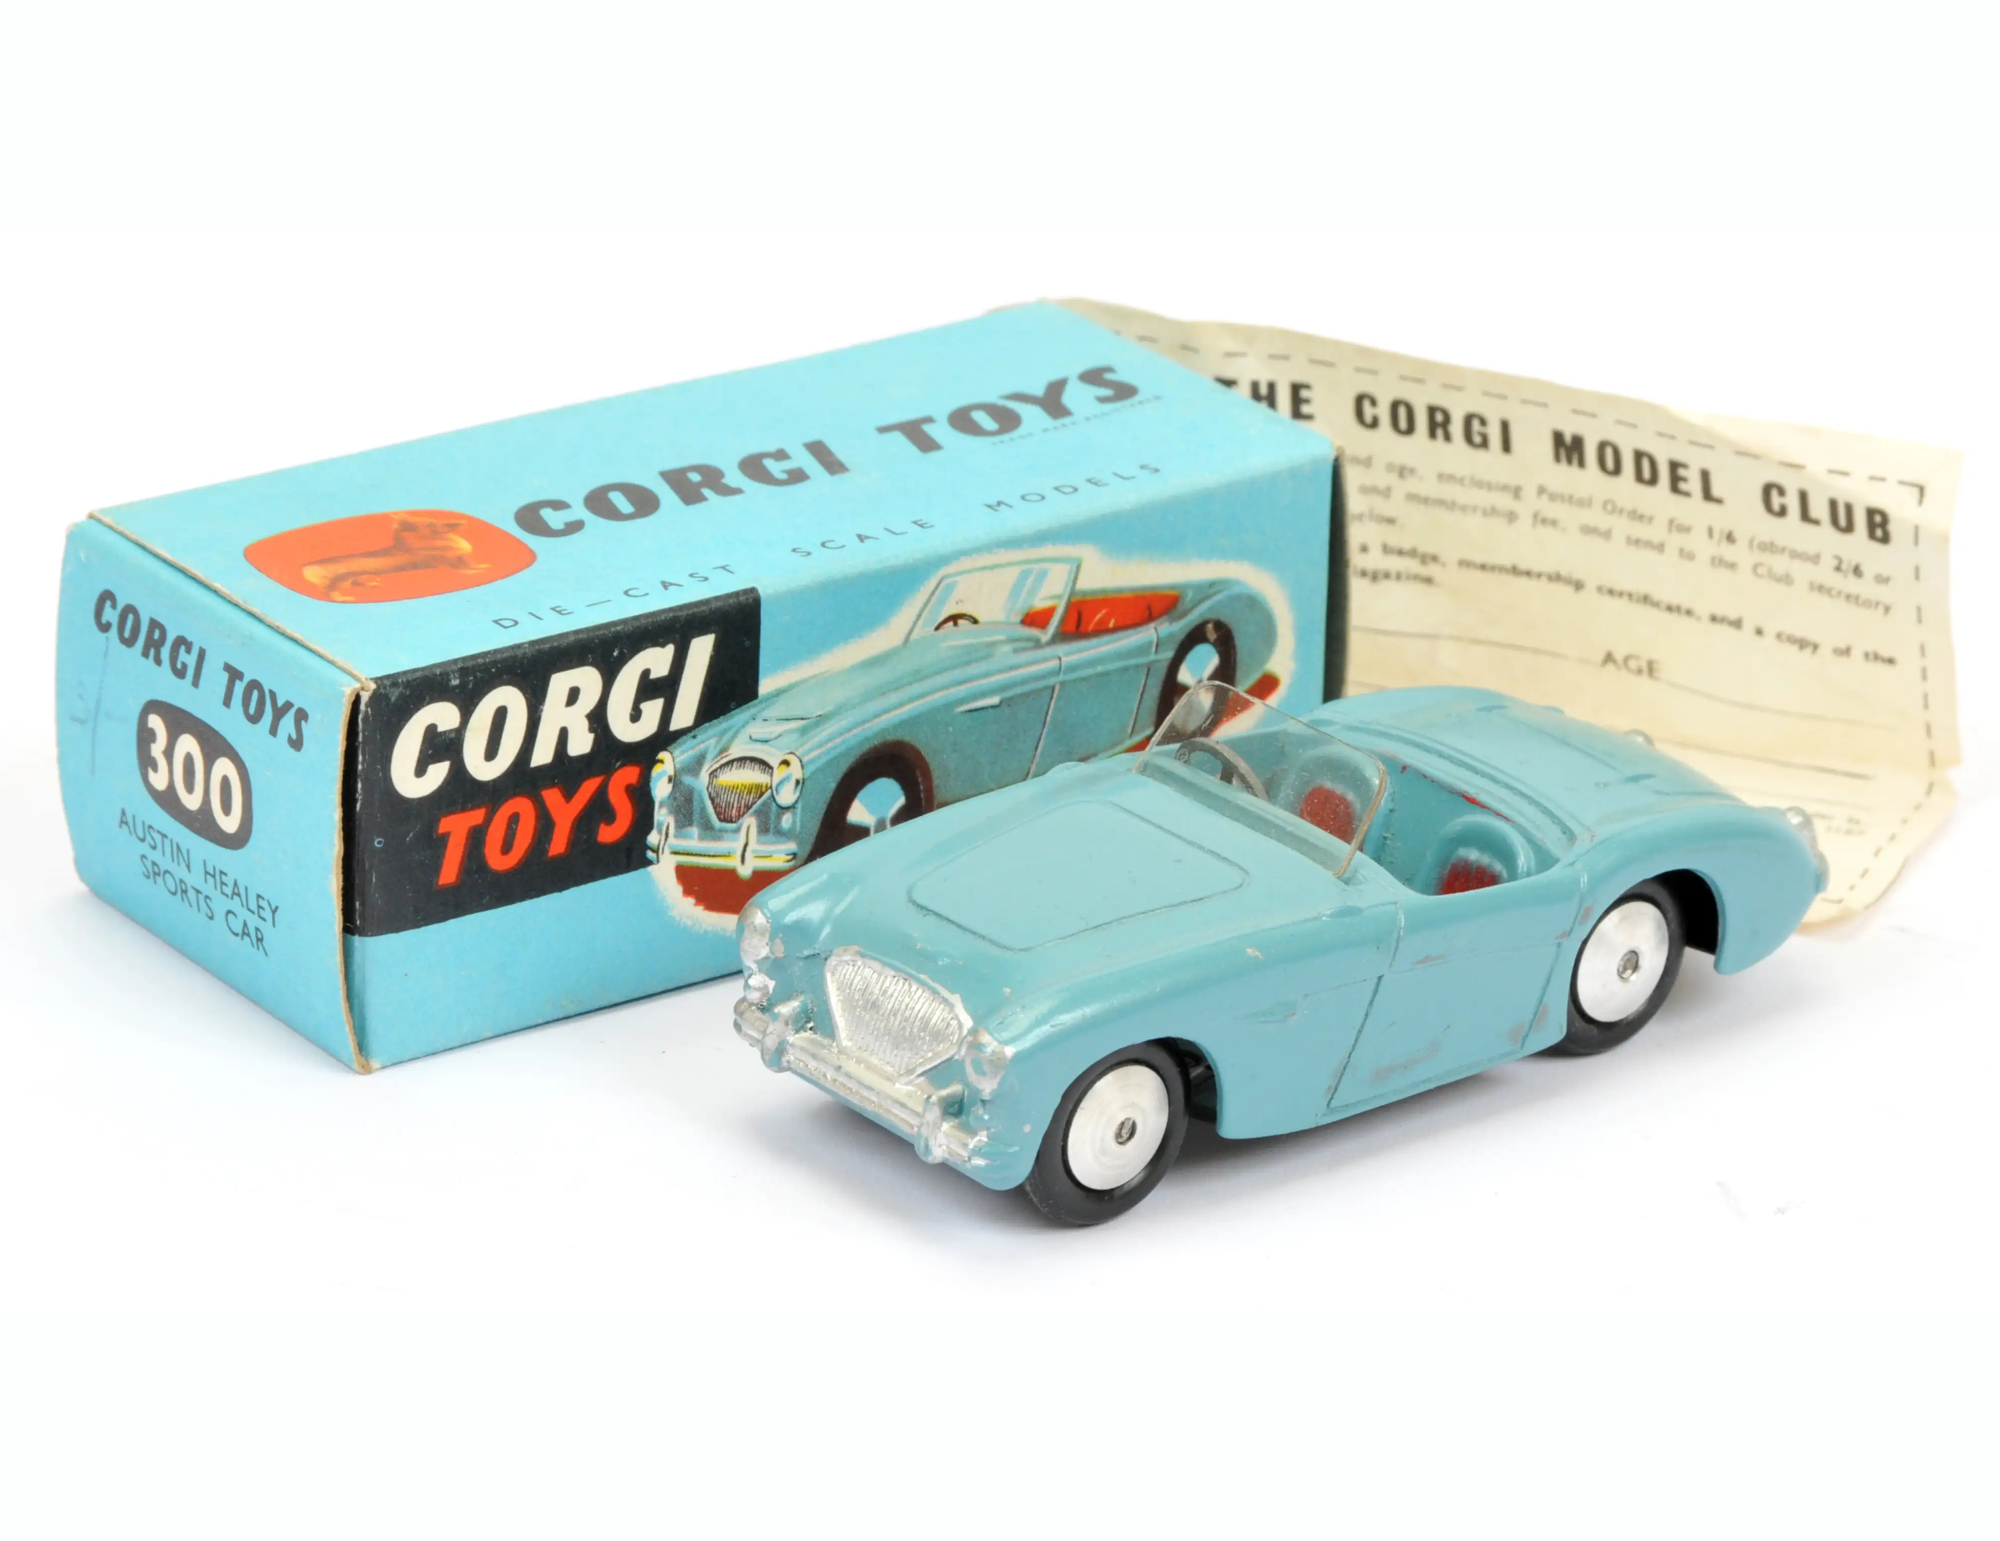 Corgi Toys 300 Austin Healey Sports Car